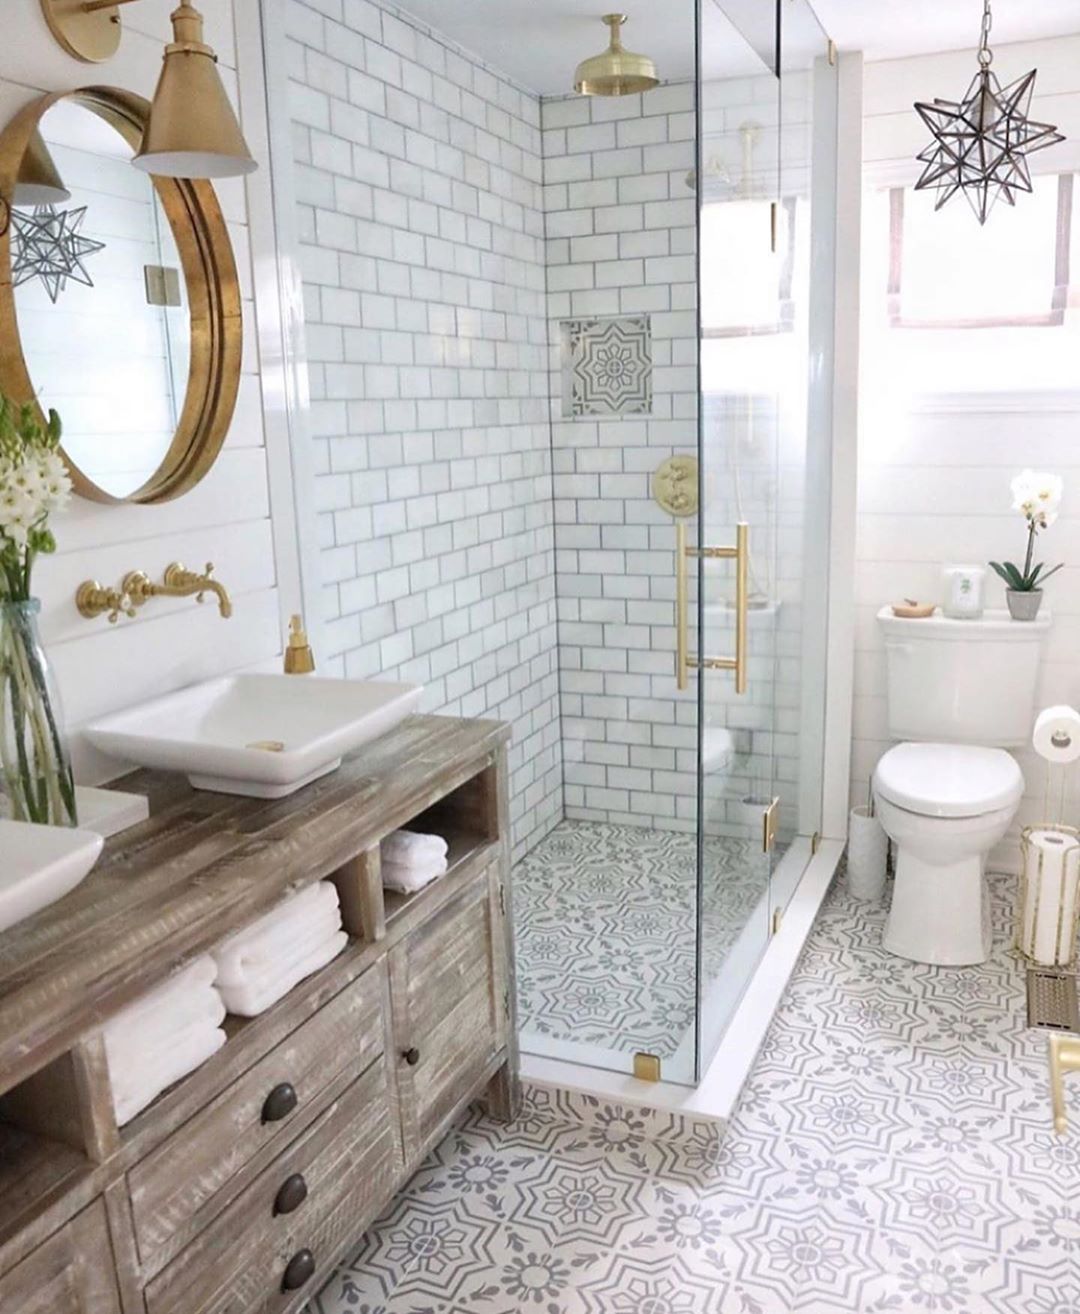 Staged luxury bathroom. Photo by Instagram user @jettsetfarmhouse